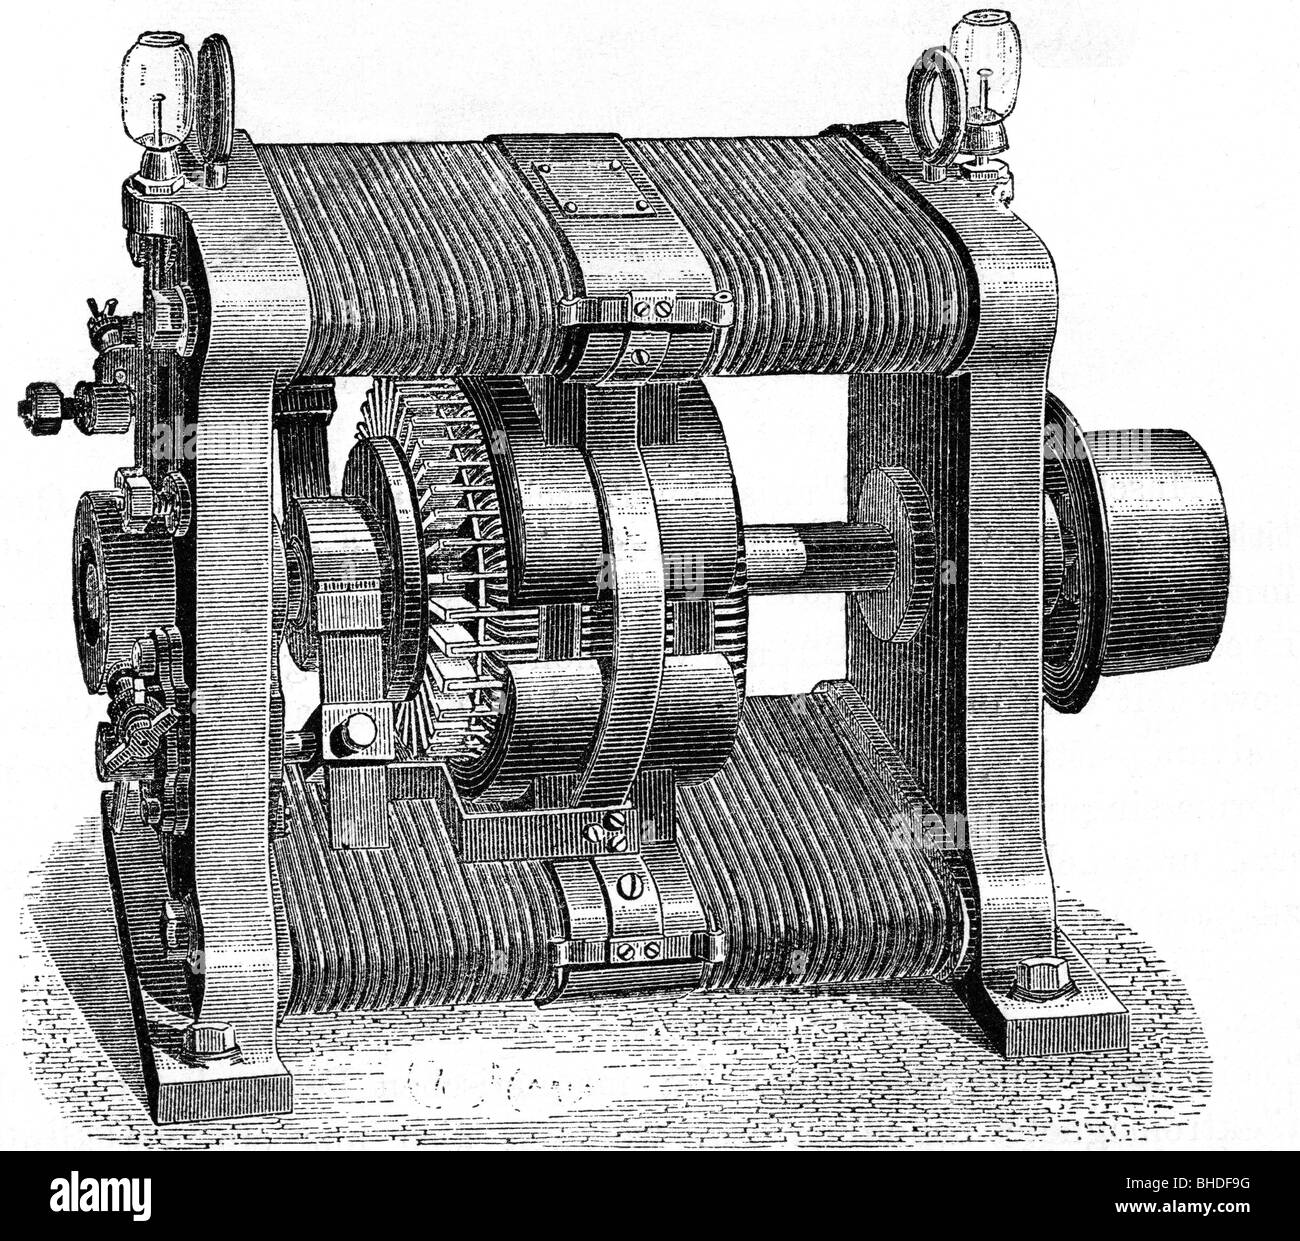 Dynamo inventor -Fotos und -Bildmaterial in hoher Auflösung – Alamy